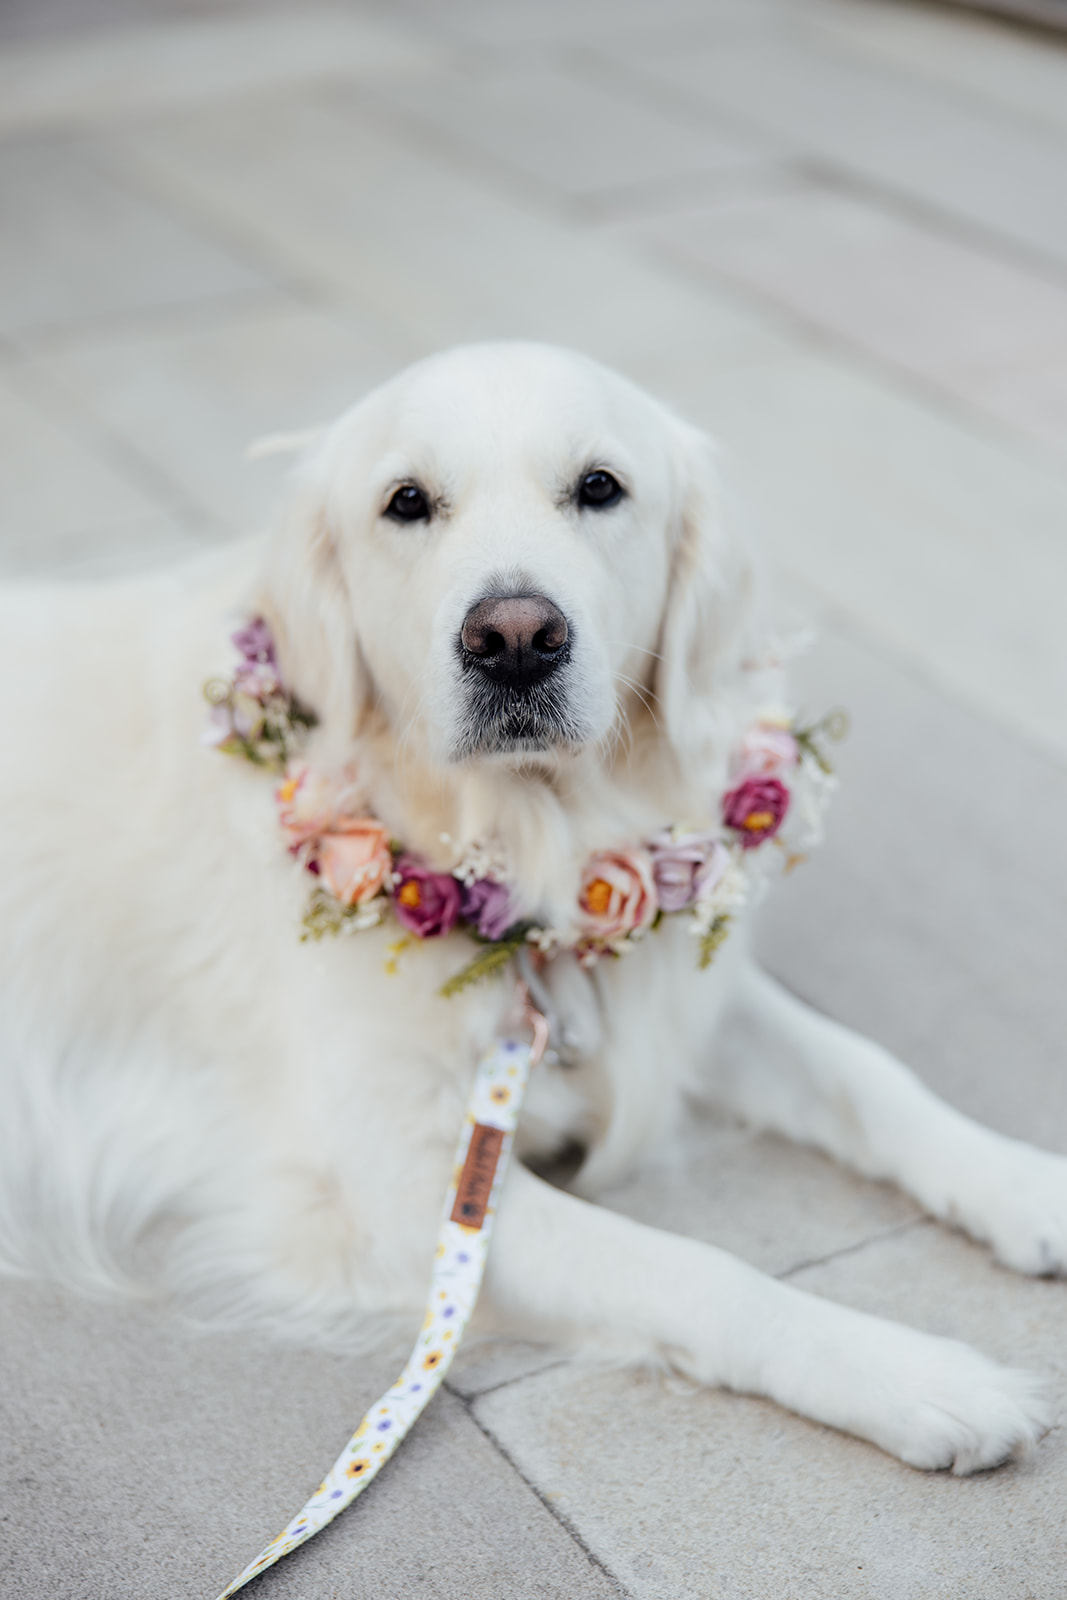 A golden retriever dog with a flower necklace